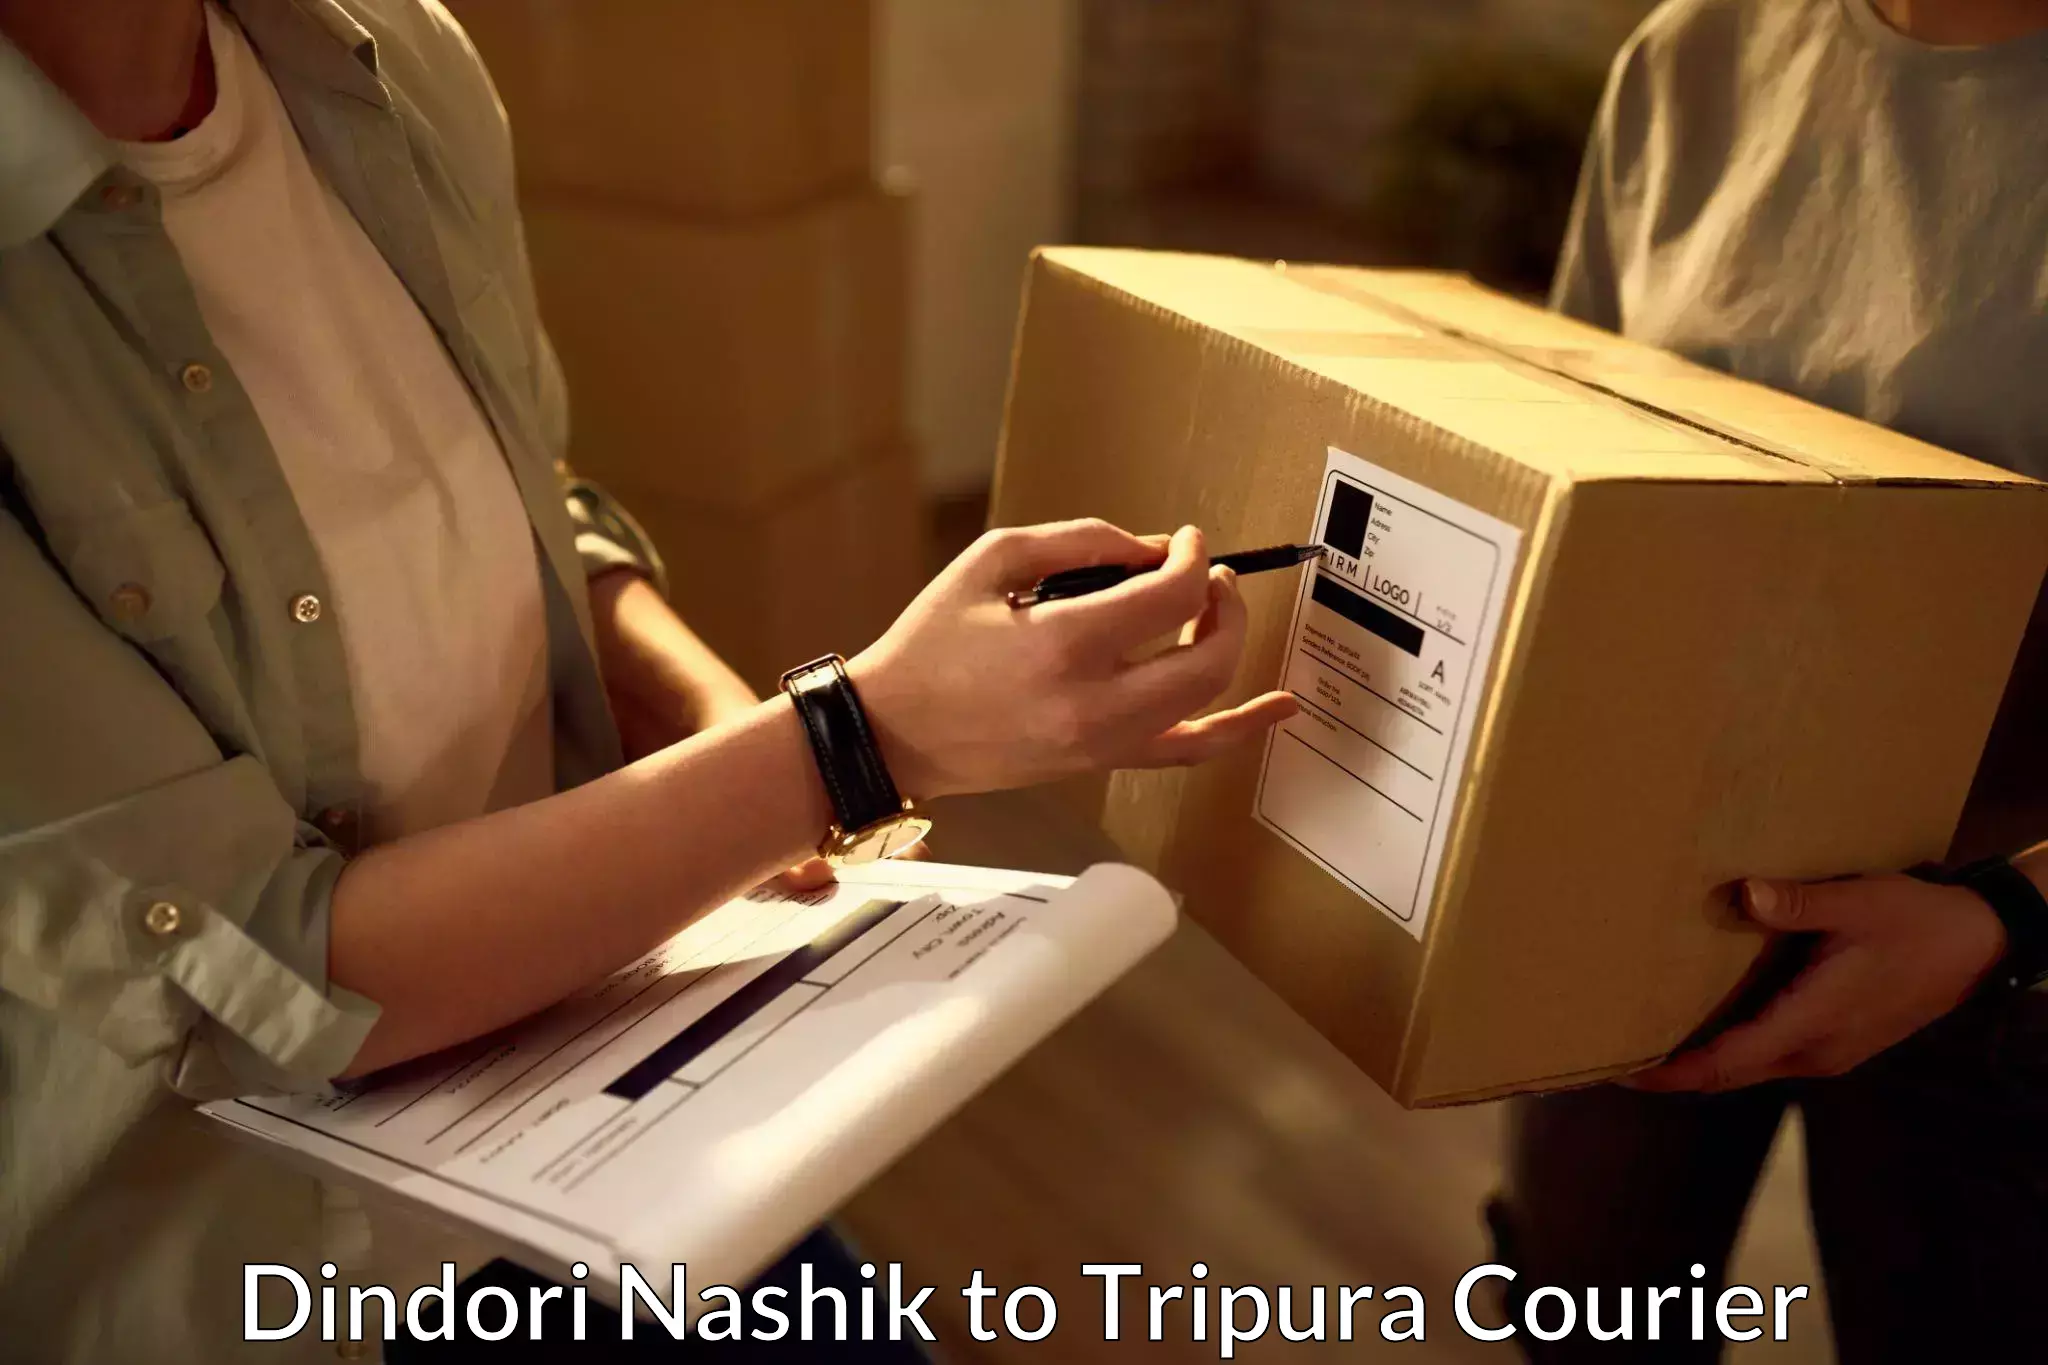 Quick dispatch service Dindori Nashik to Tripura